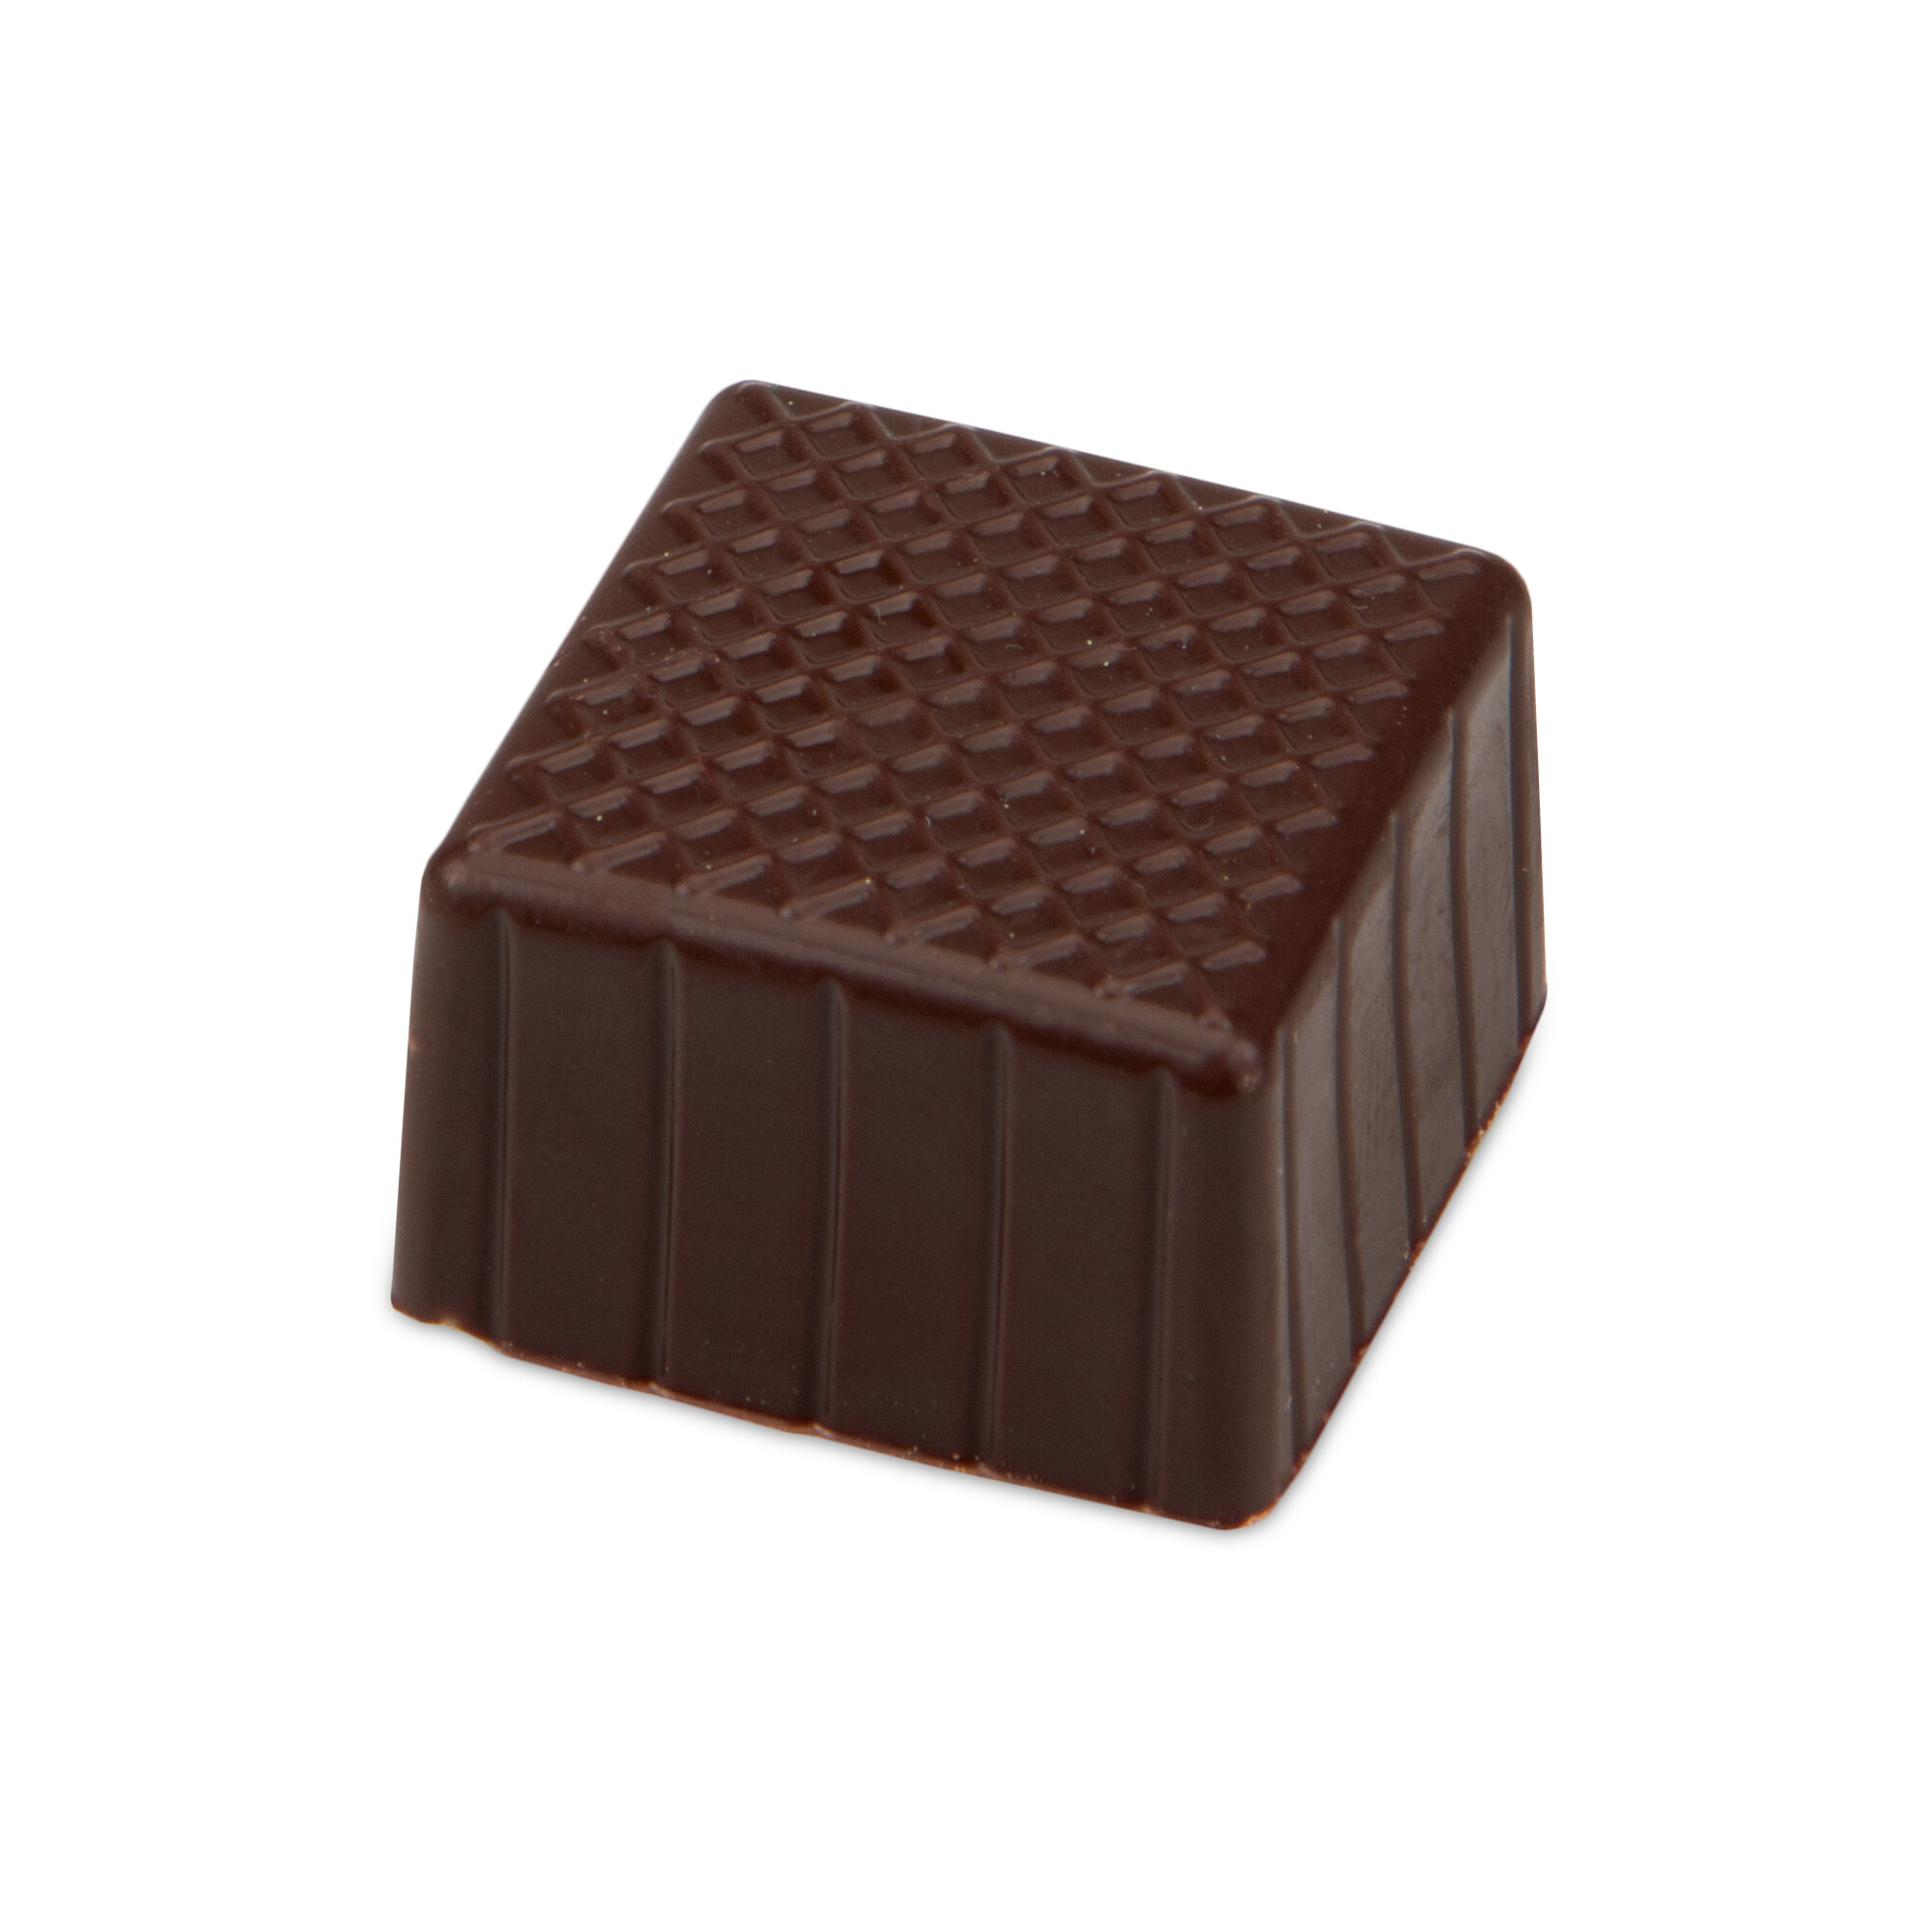 Chocolate hollow bodies – Carree – Dark chocolate – 63 pieces